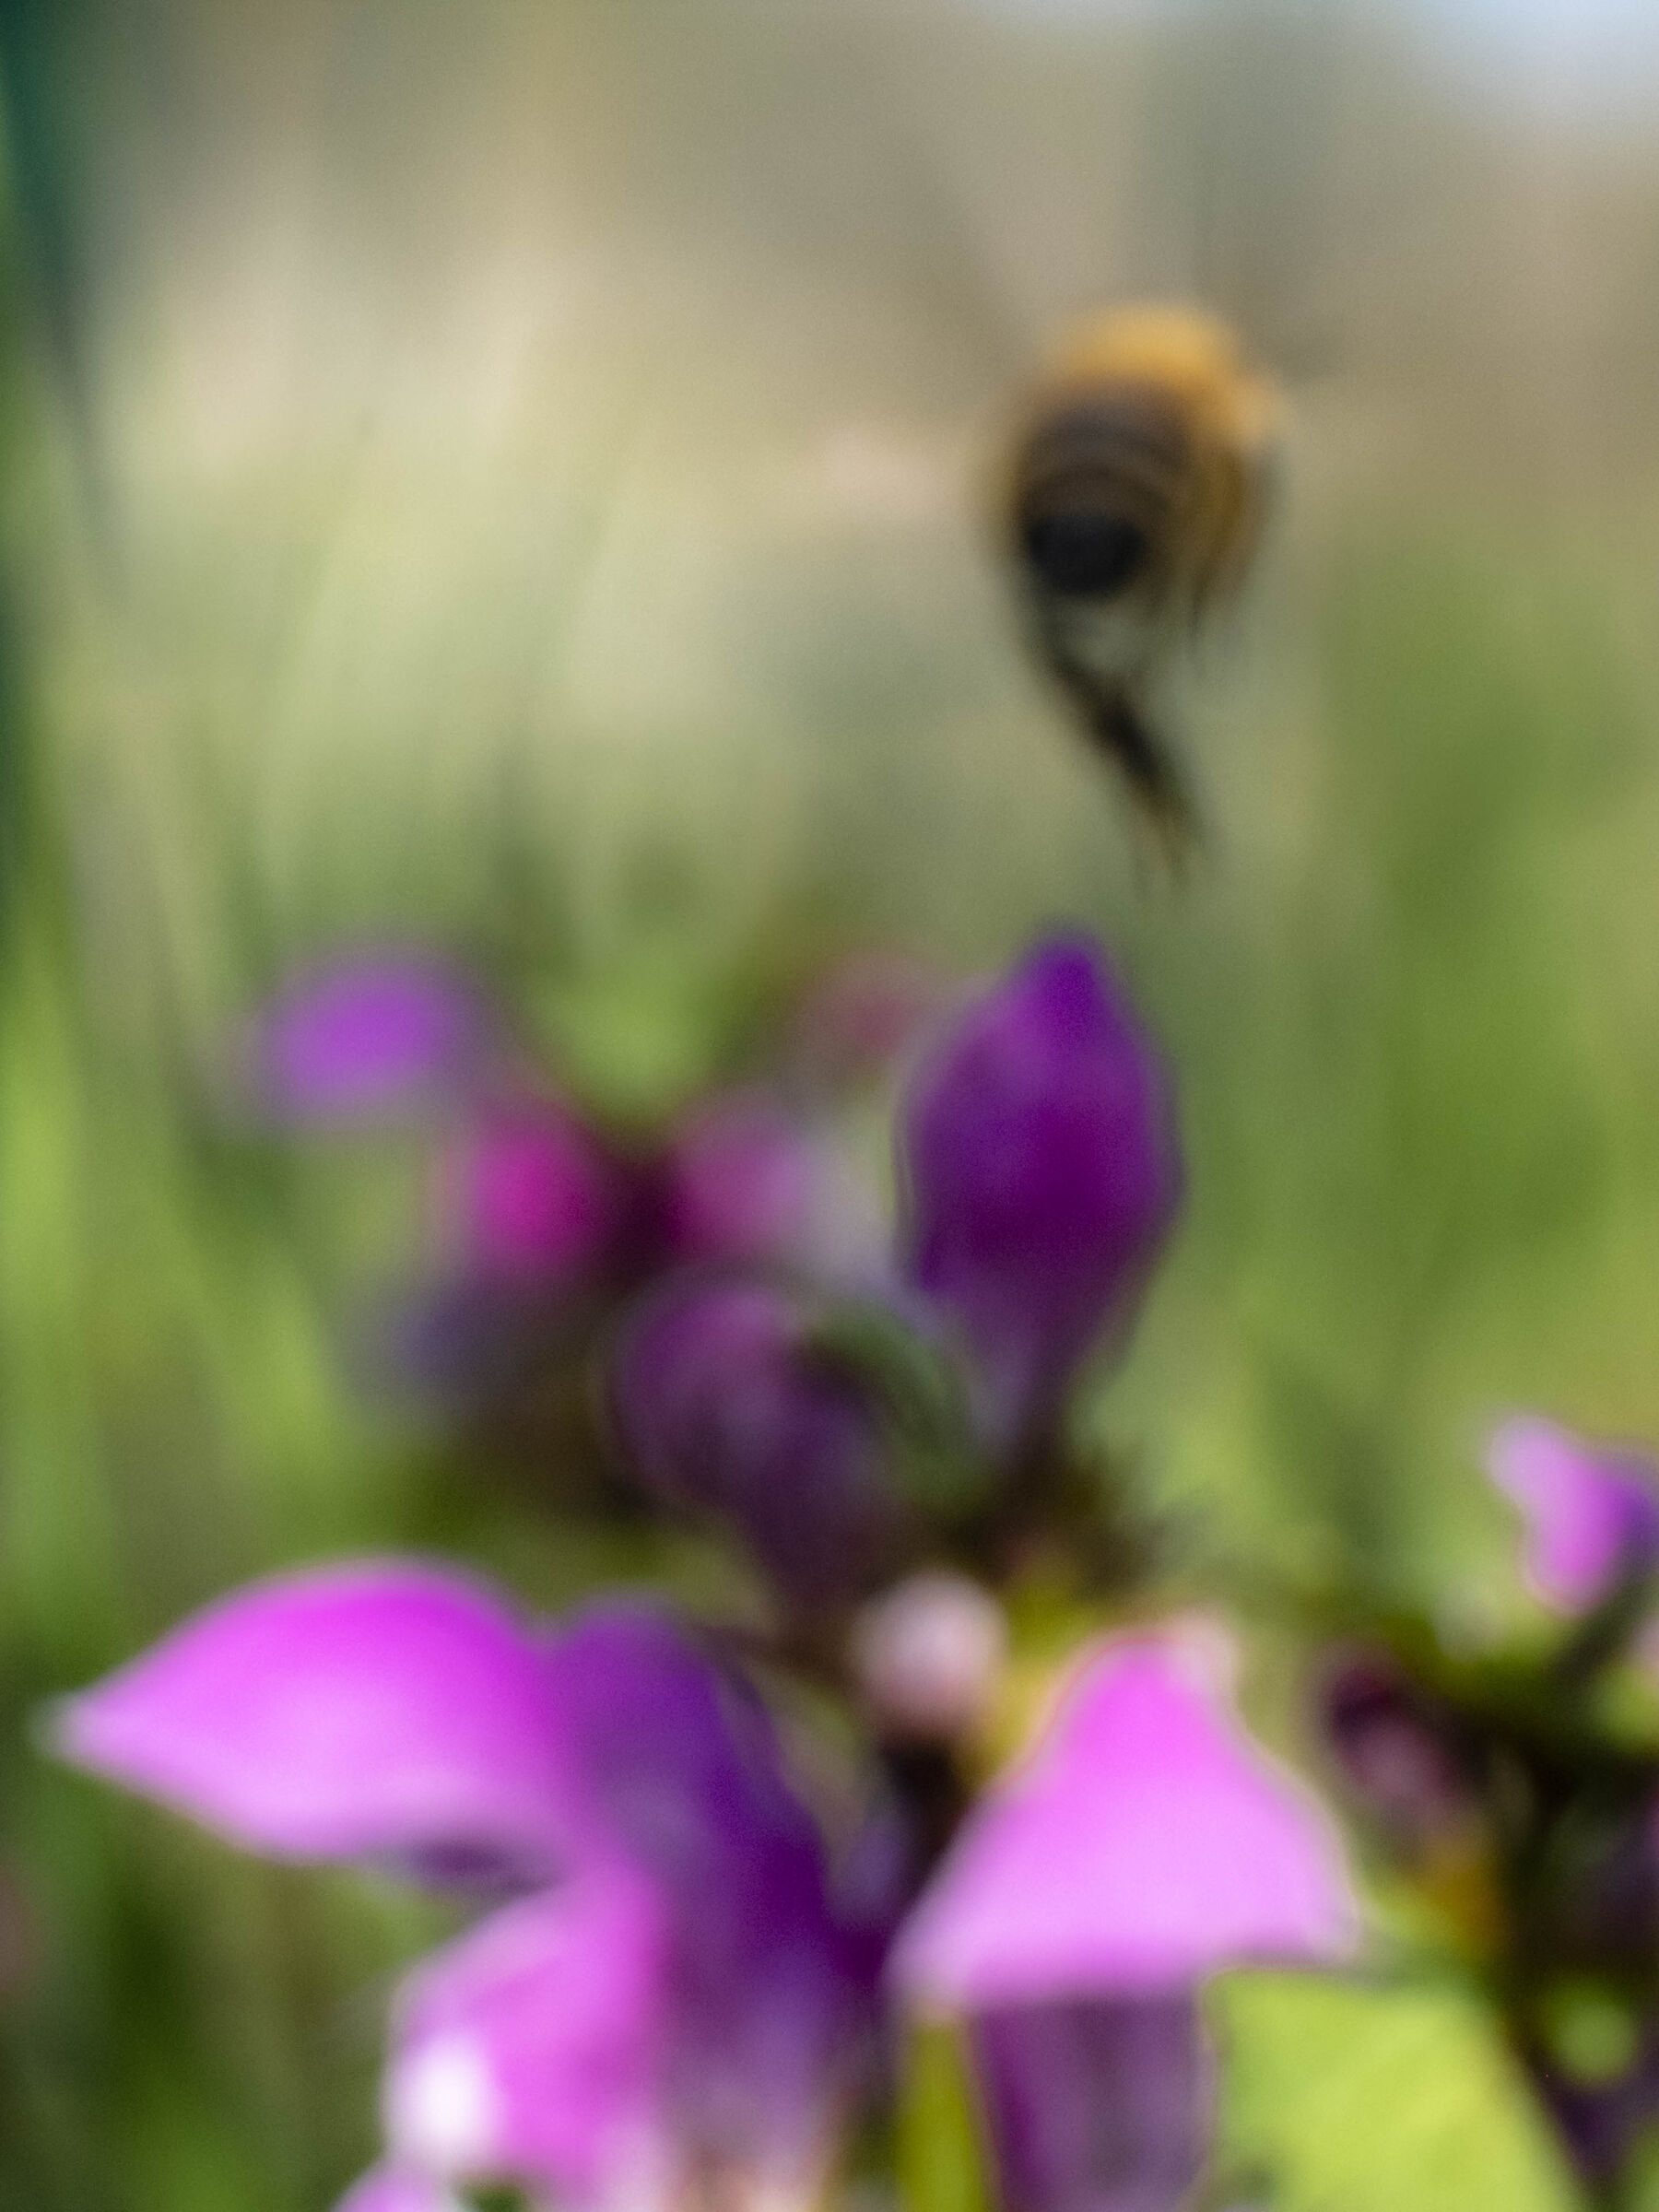 Bees&flowers...